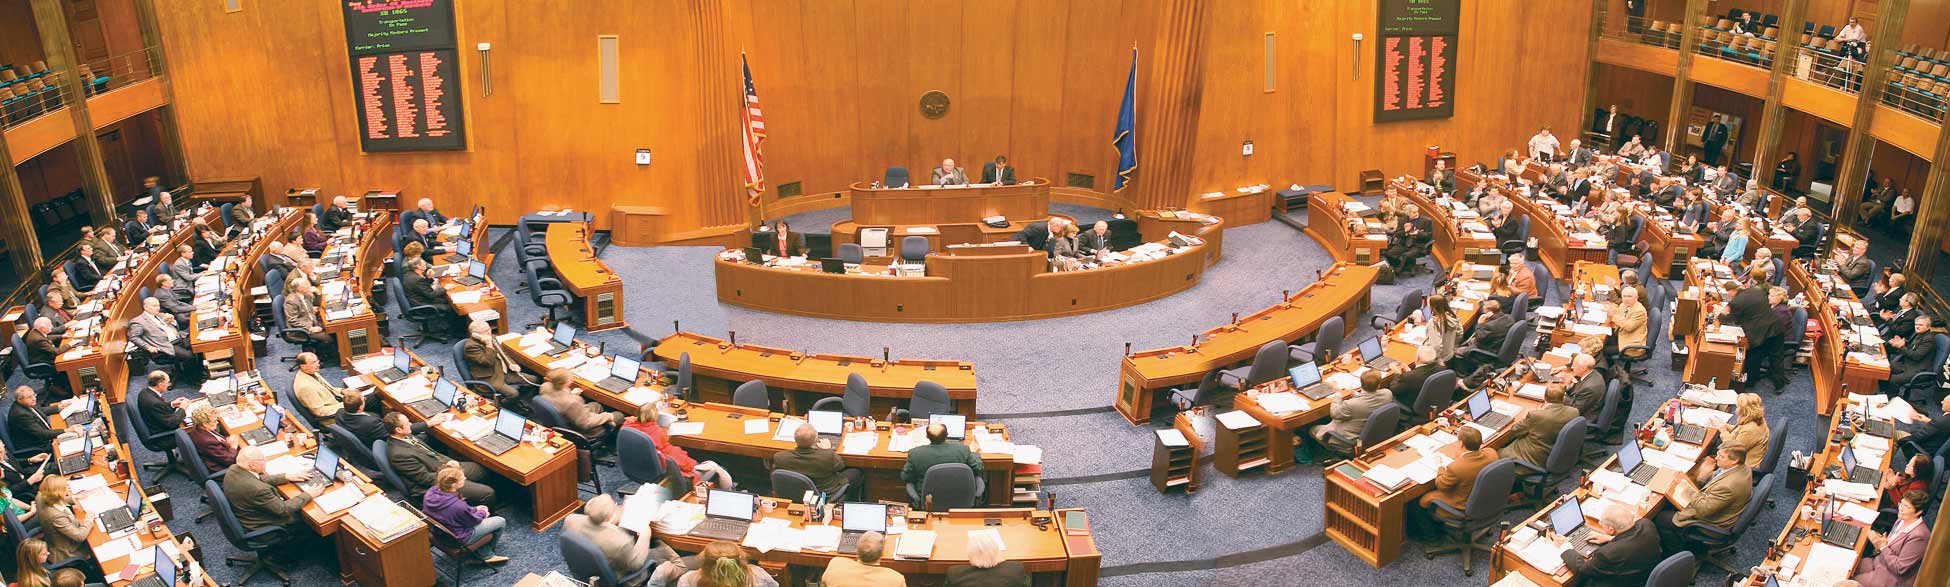 The chambers of the North Dakota House of Representatives